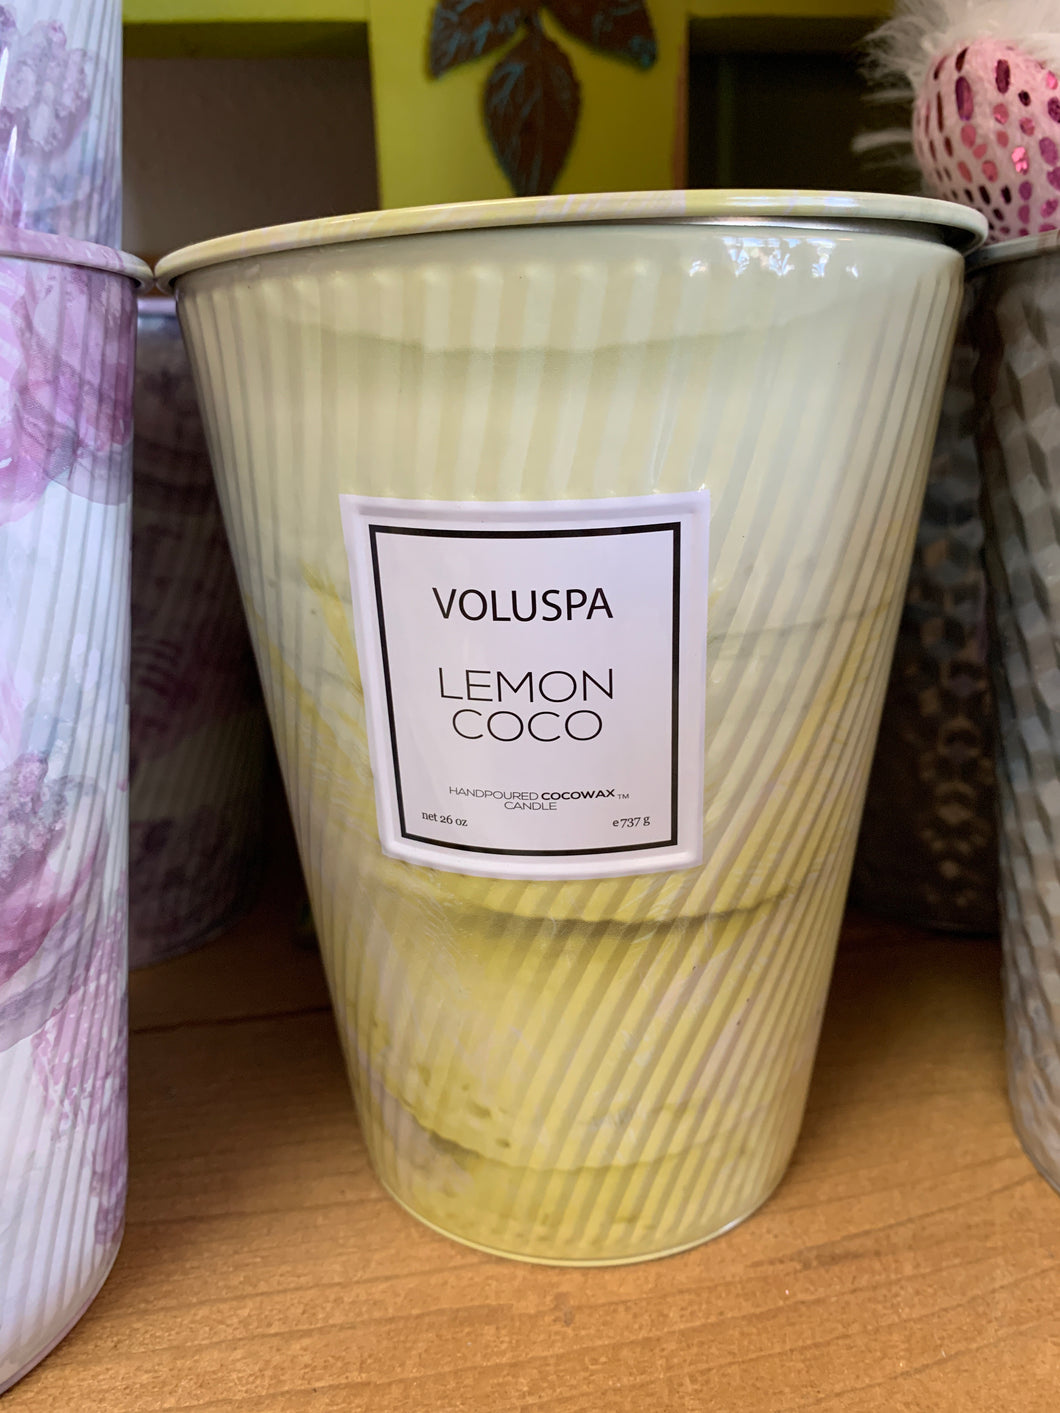 Lemon Coco by Voluspa-Porch Pickup only